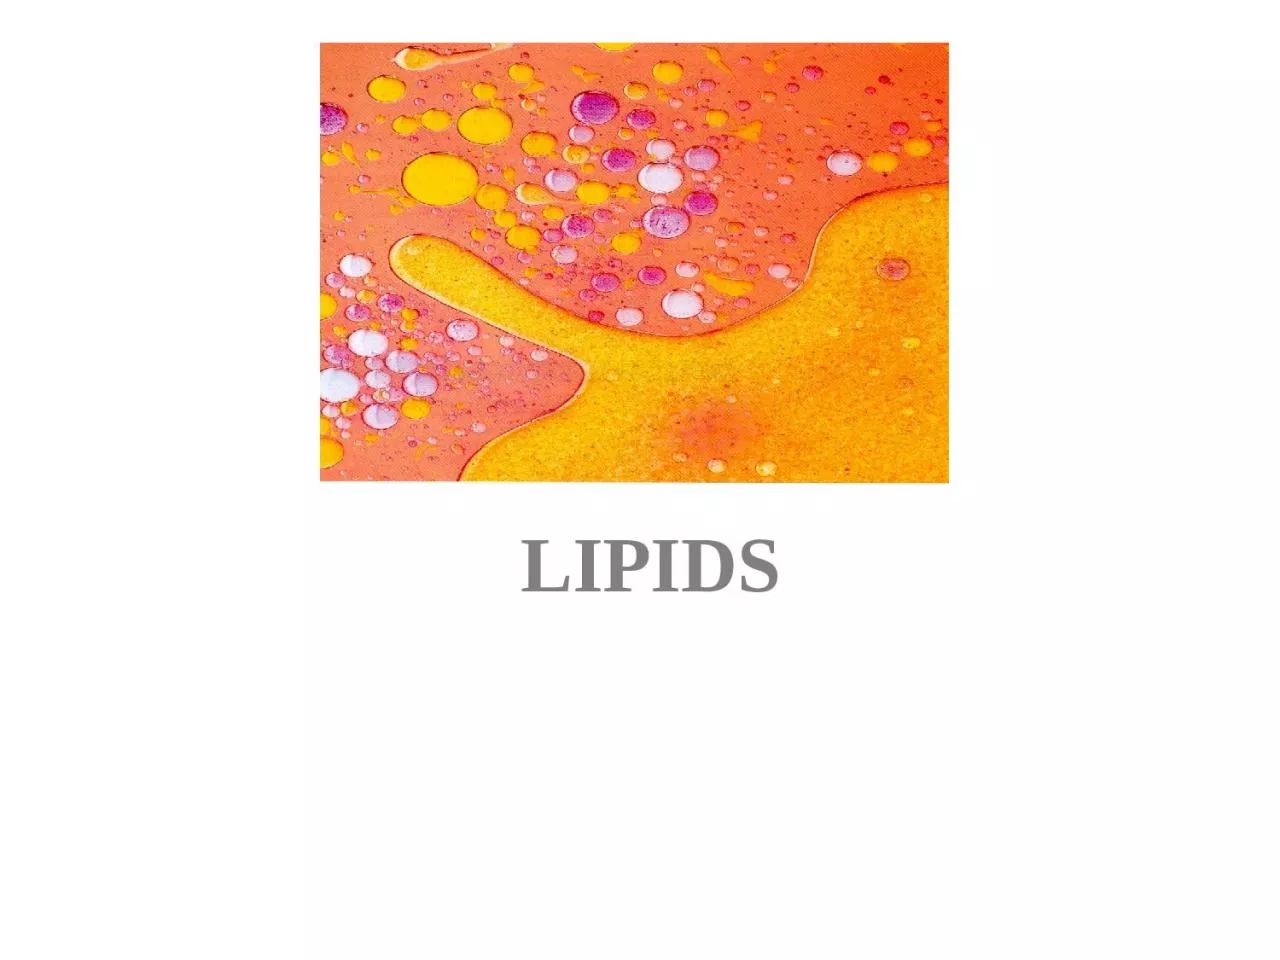 LIPIDS By  Henry Wormser, Ph.D.